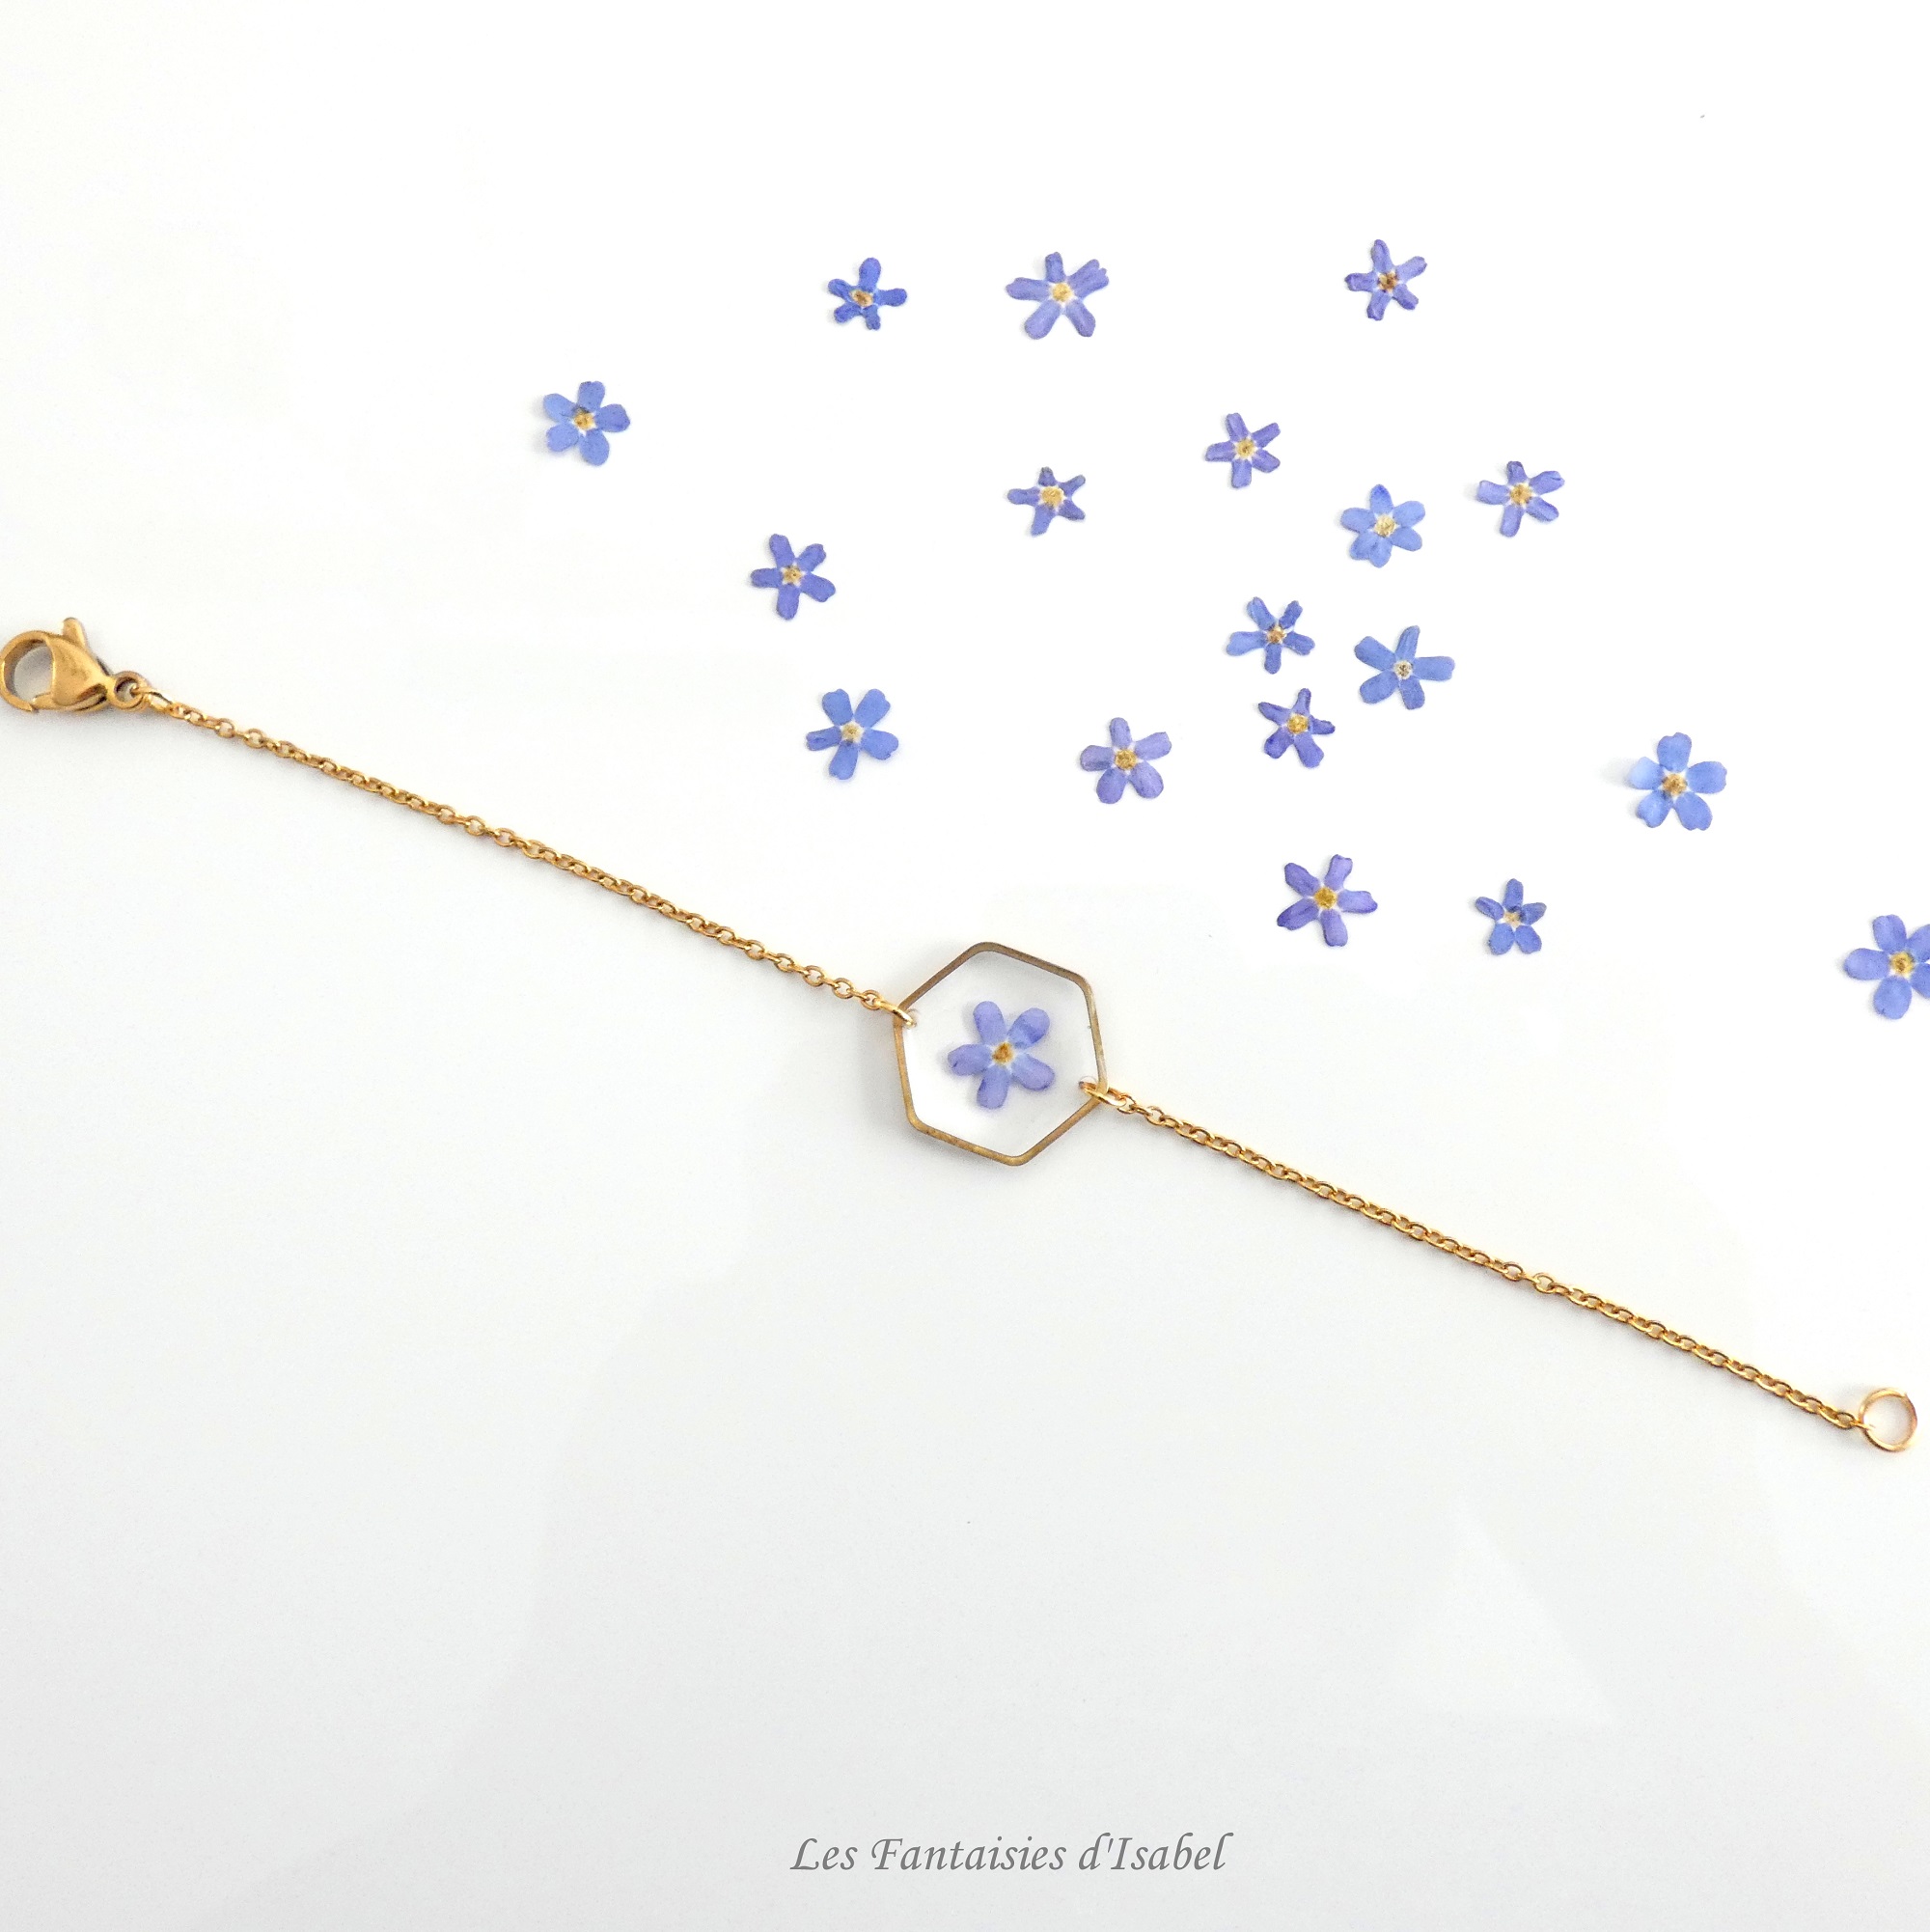 60-bracelet hesagonal acier inox doré fleur myosotis bleu artisanal landes